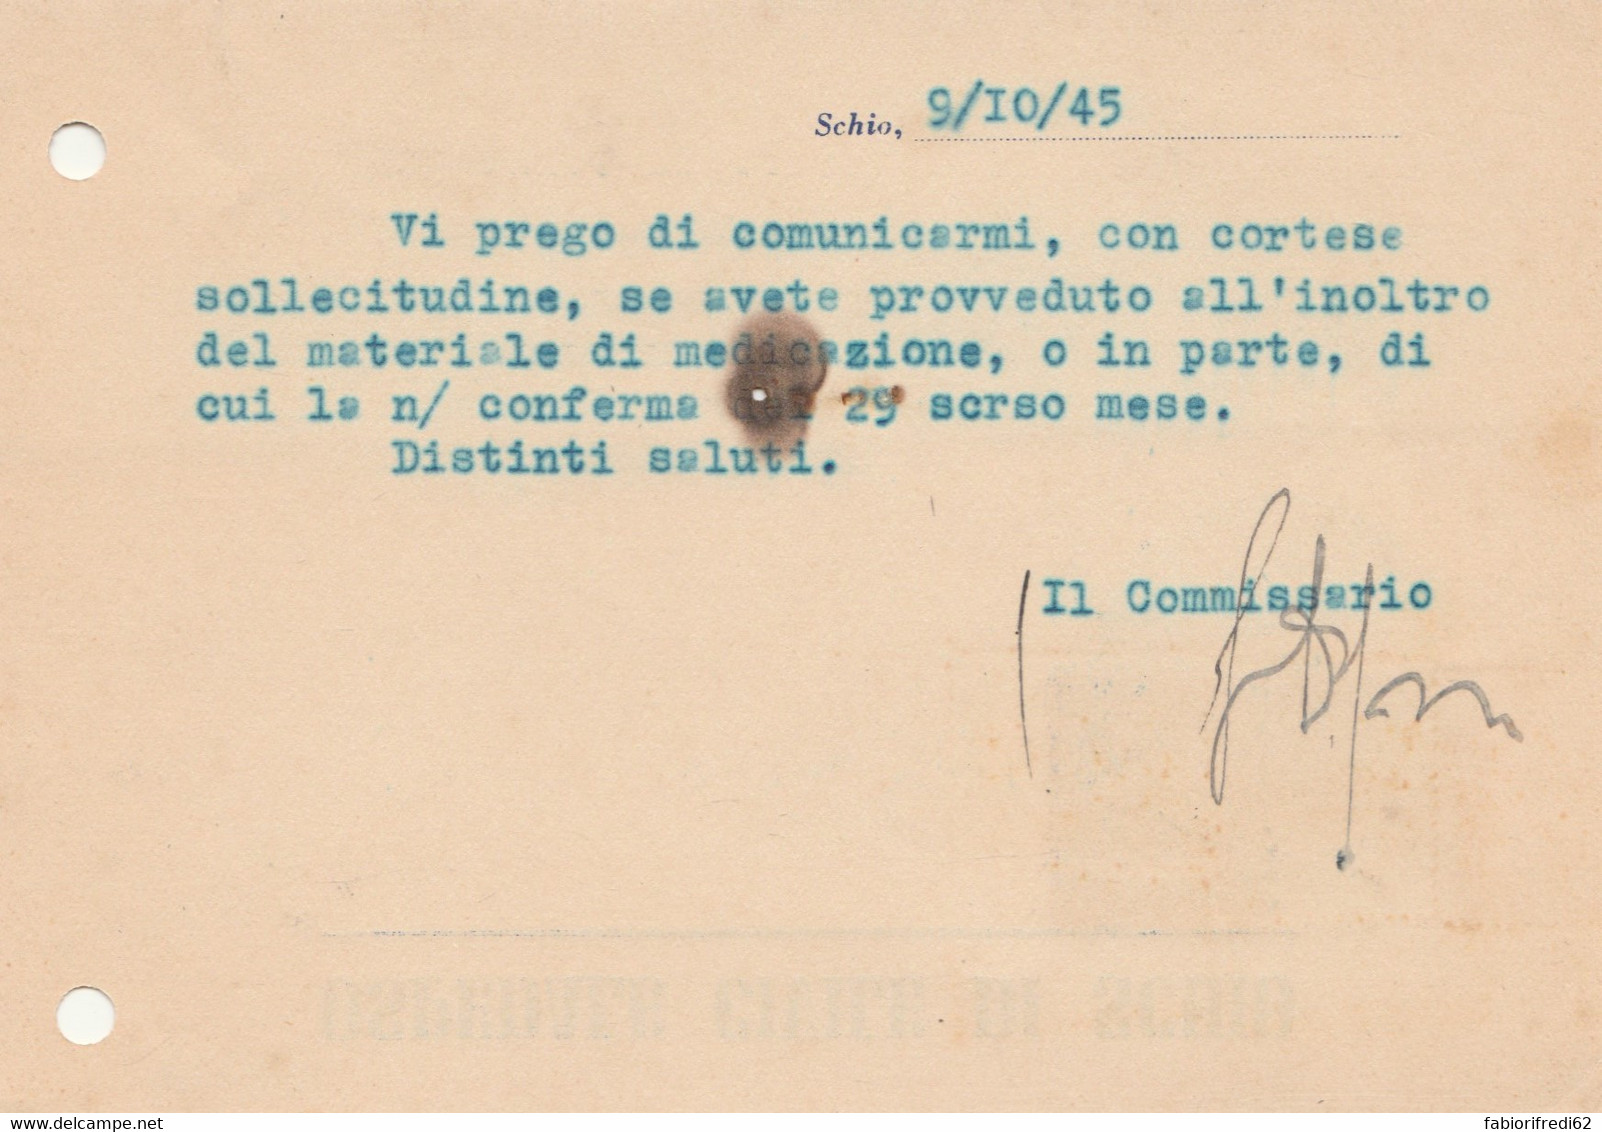 CARTOLINA POSTALE RSI 1+25 TIMBRO AZZURRO VICENZA 1945 (RY643 - Marcofilía